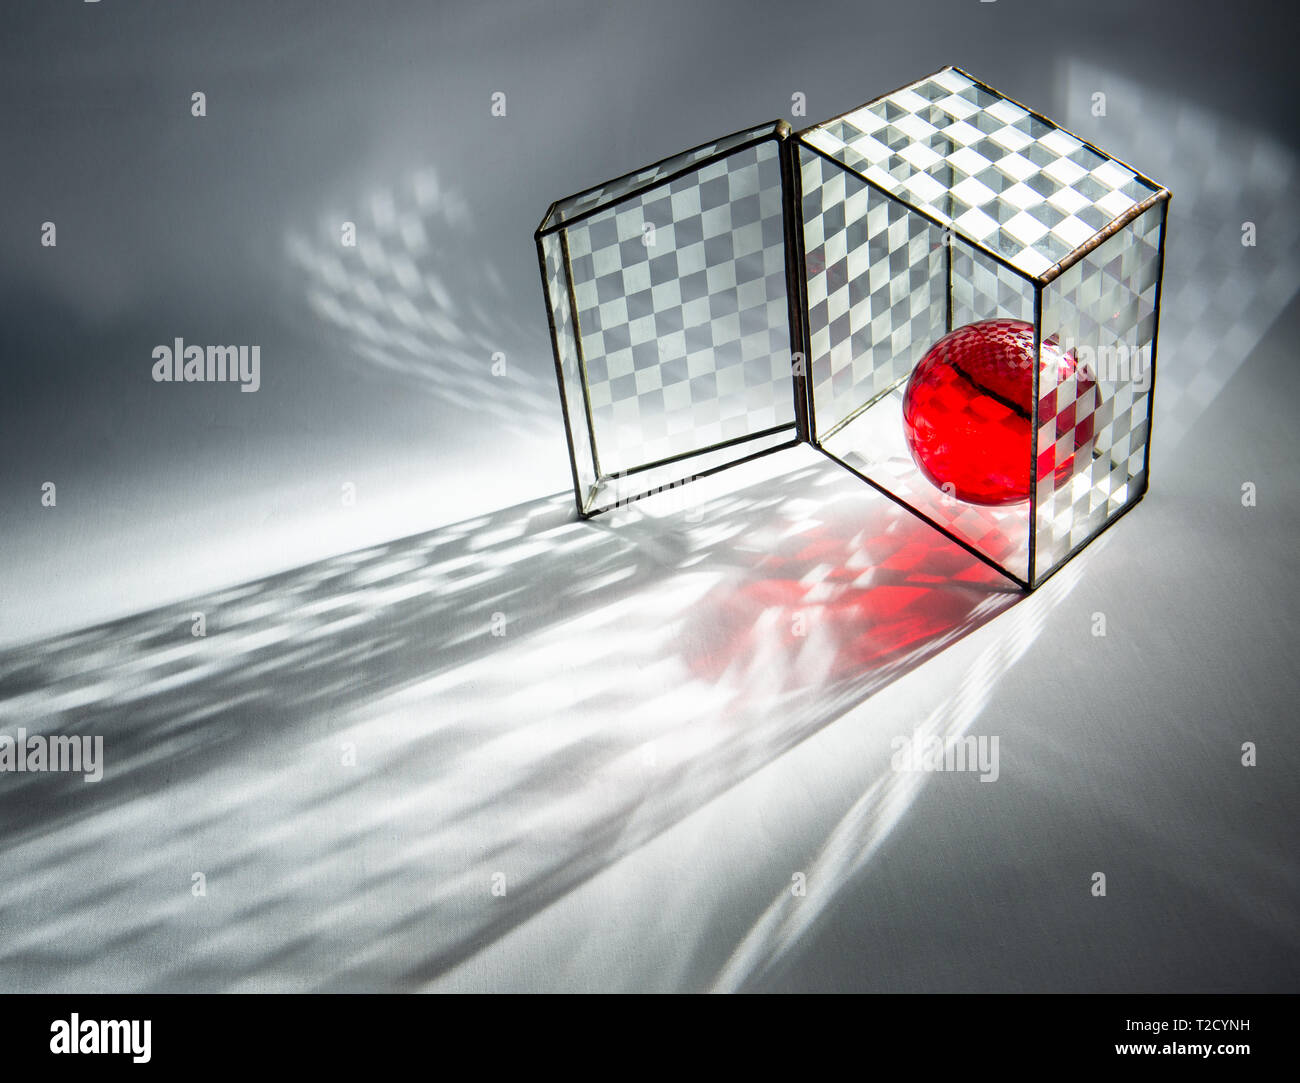 Red glass ball inside checkered glass box. Stock Photo